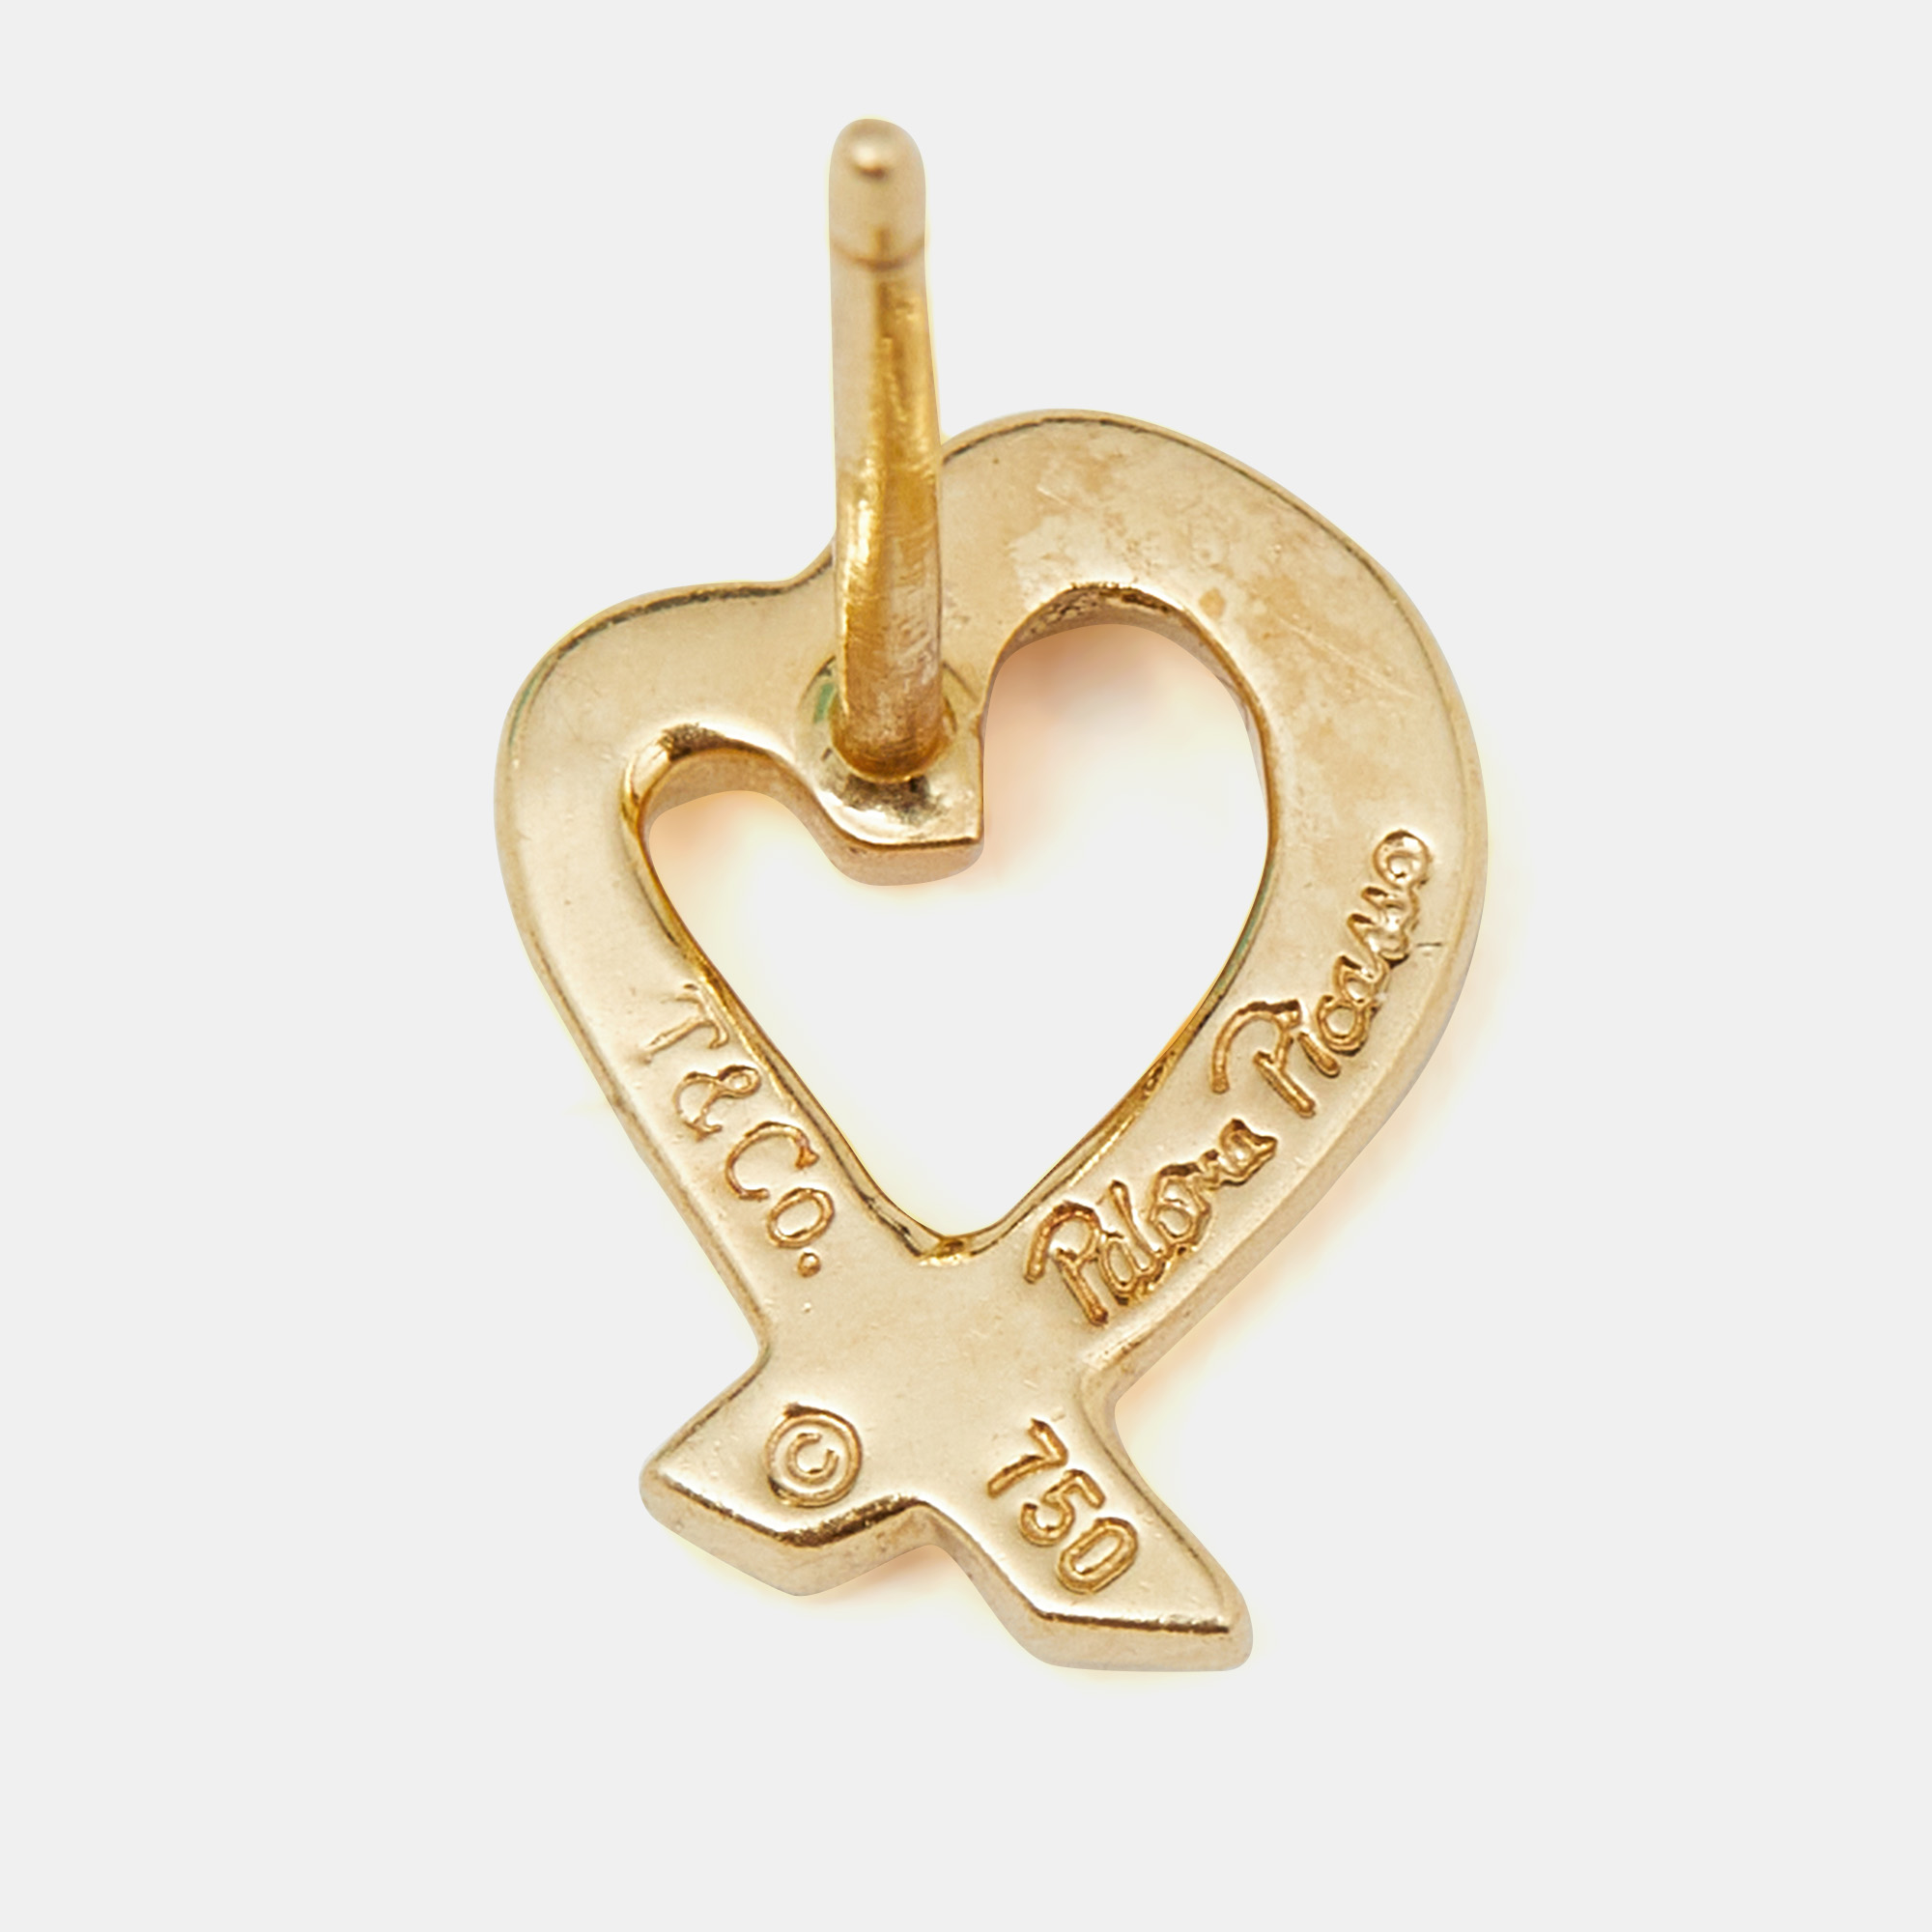 Tiffany & Co. Paloma Picasso Loving Heart 18K Yellow Gold Stud Earrings